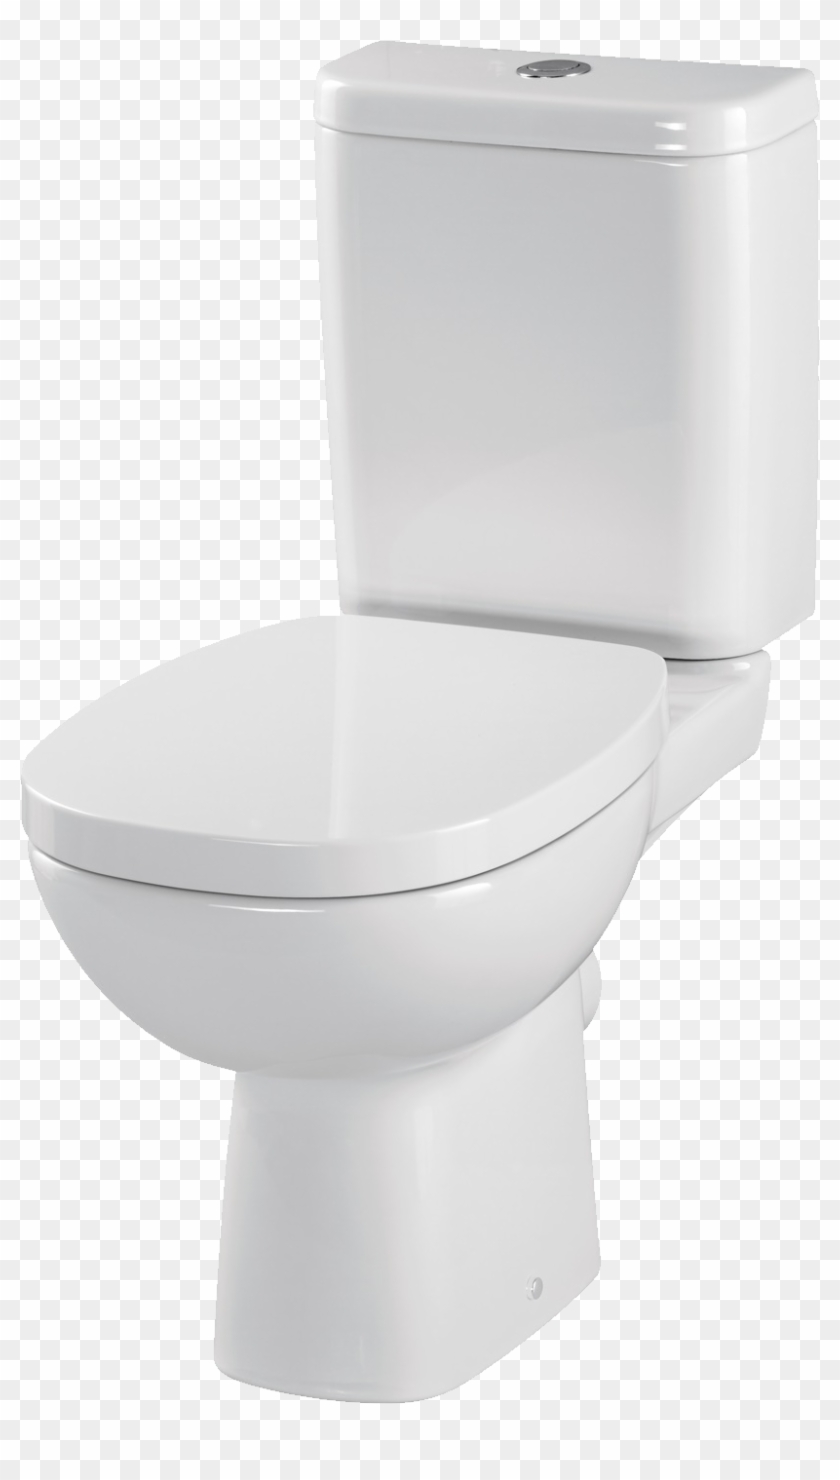 Toilet, Flush Toilet, Powder Room, Toilets, Bathroom - Facile Cersanit Clipart #508517